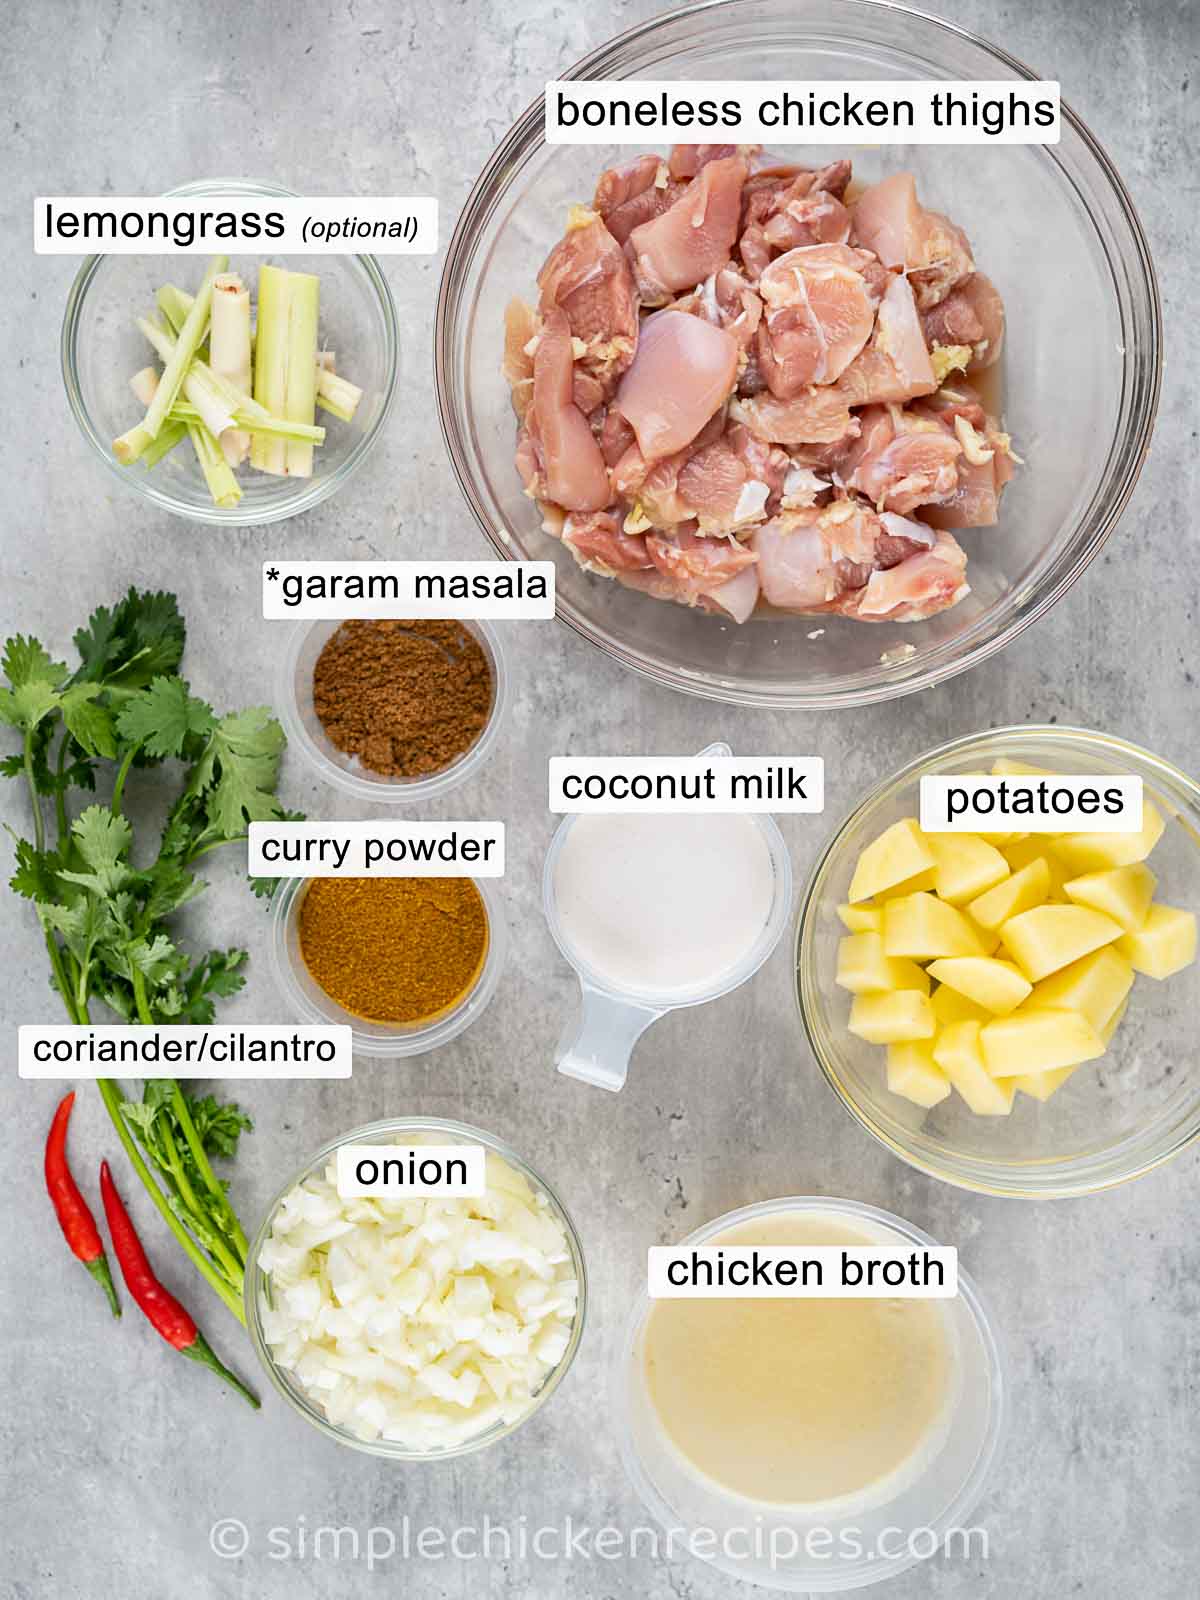 boneless chicken thighs. curry powder, garam masala, coconut milk, potatoes, chicken broth and onion.